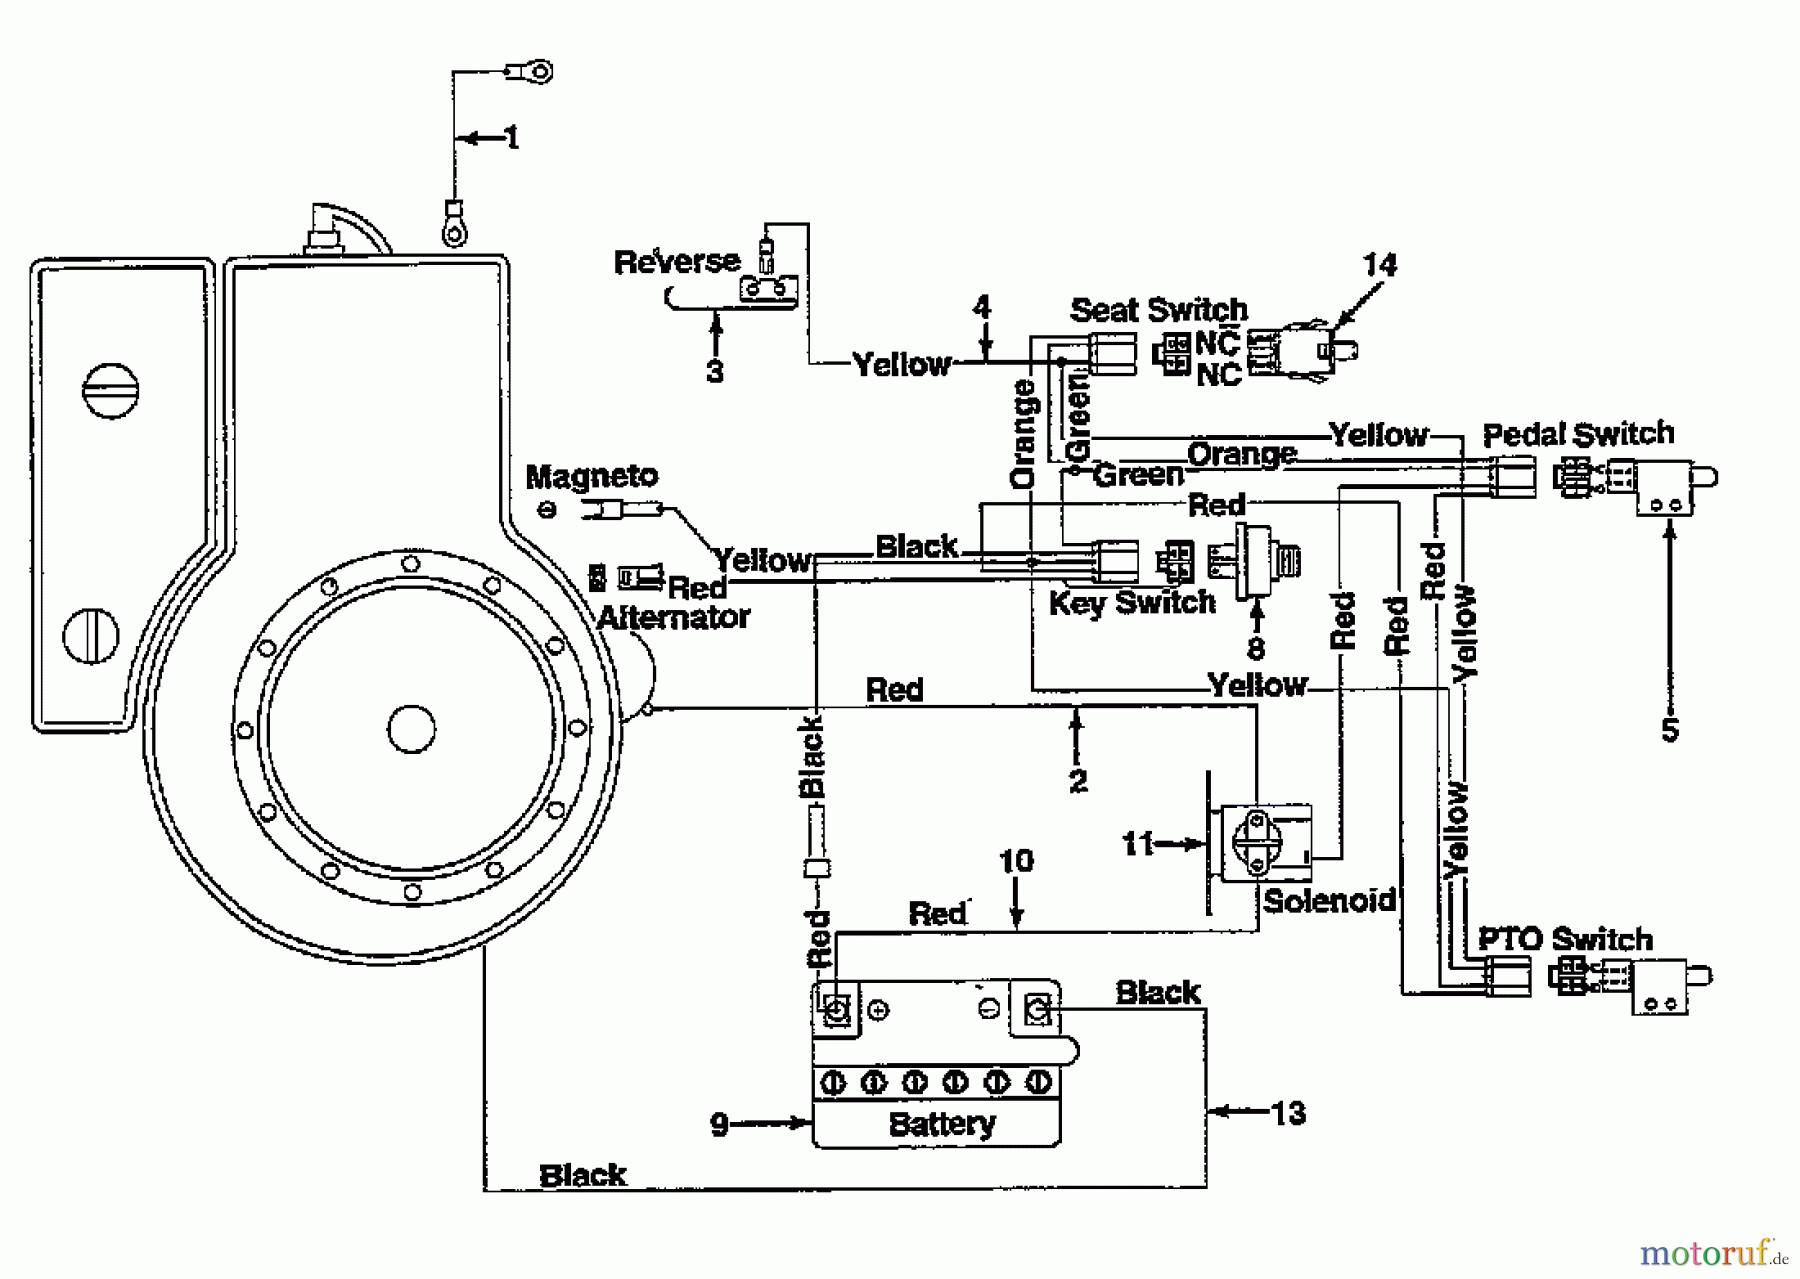  Motec Lawn tractors ST 10 E 132-520C632  (1992) Wiring diagram